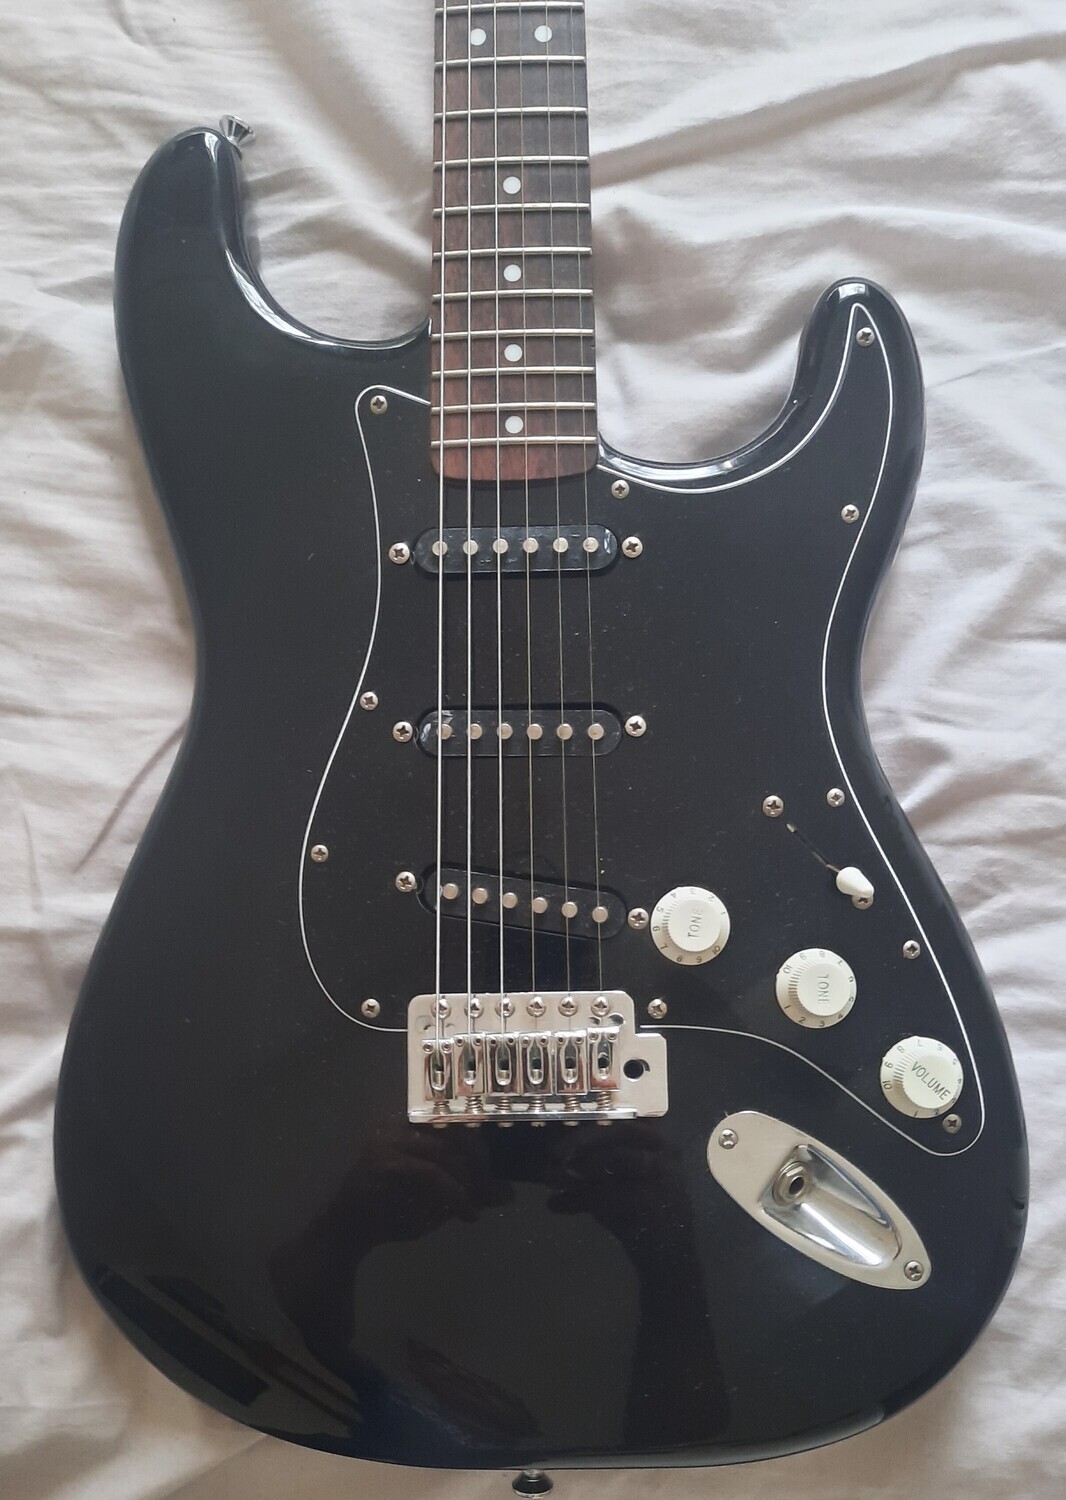 Fender Squire Black on Black